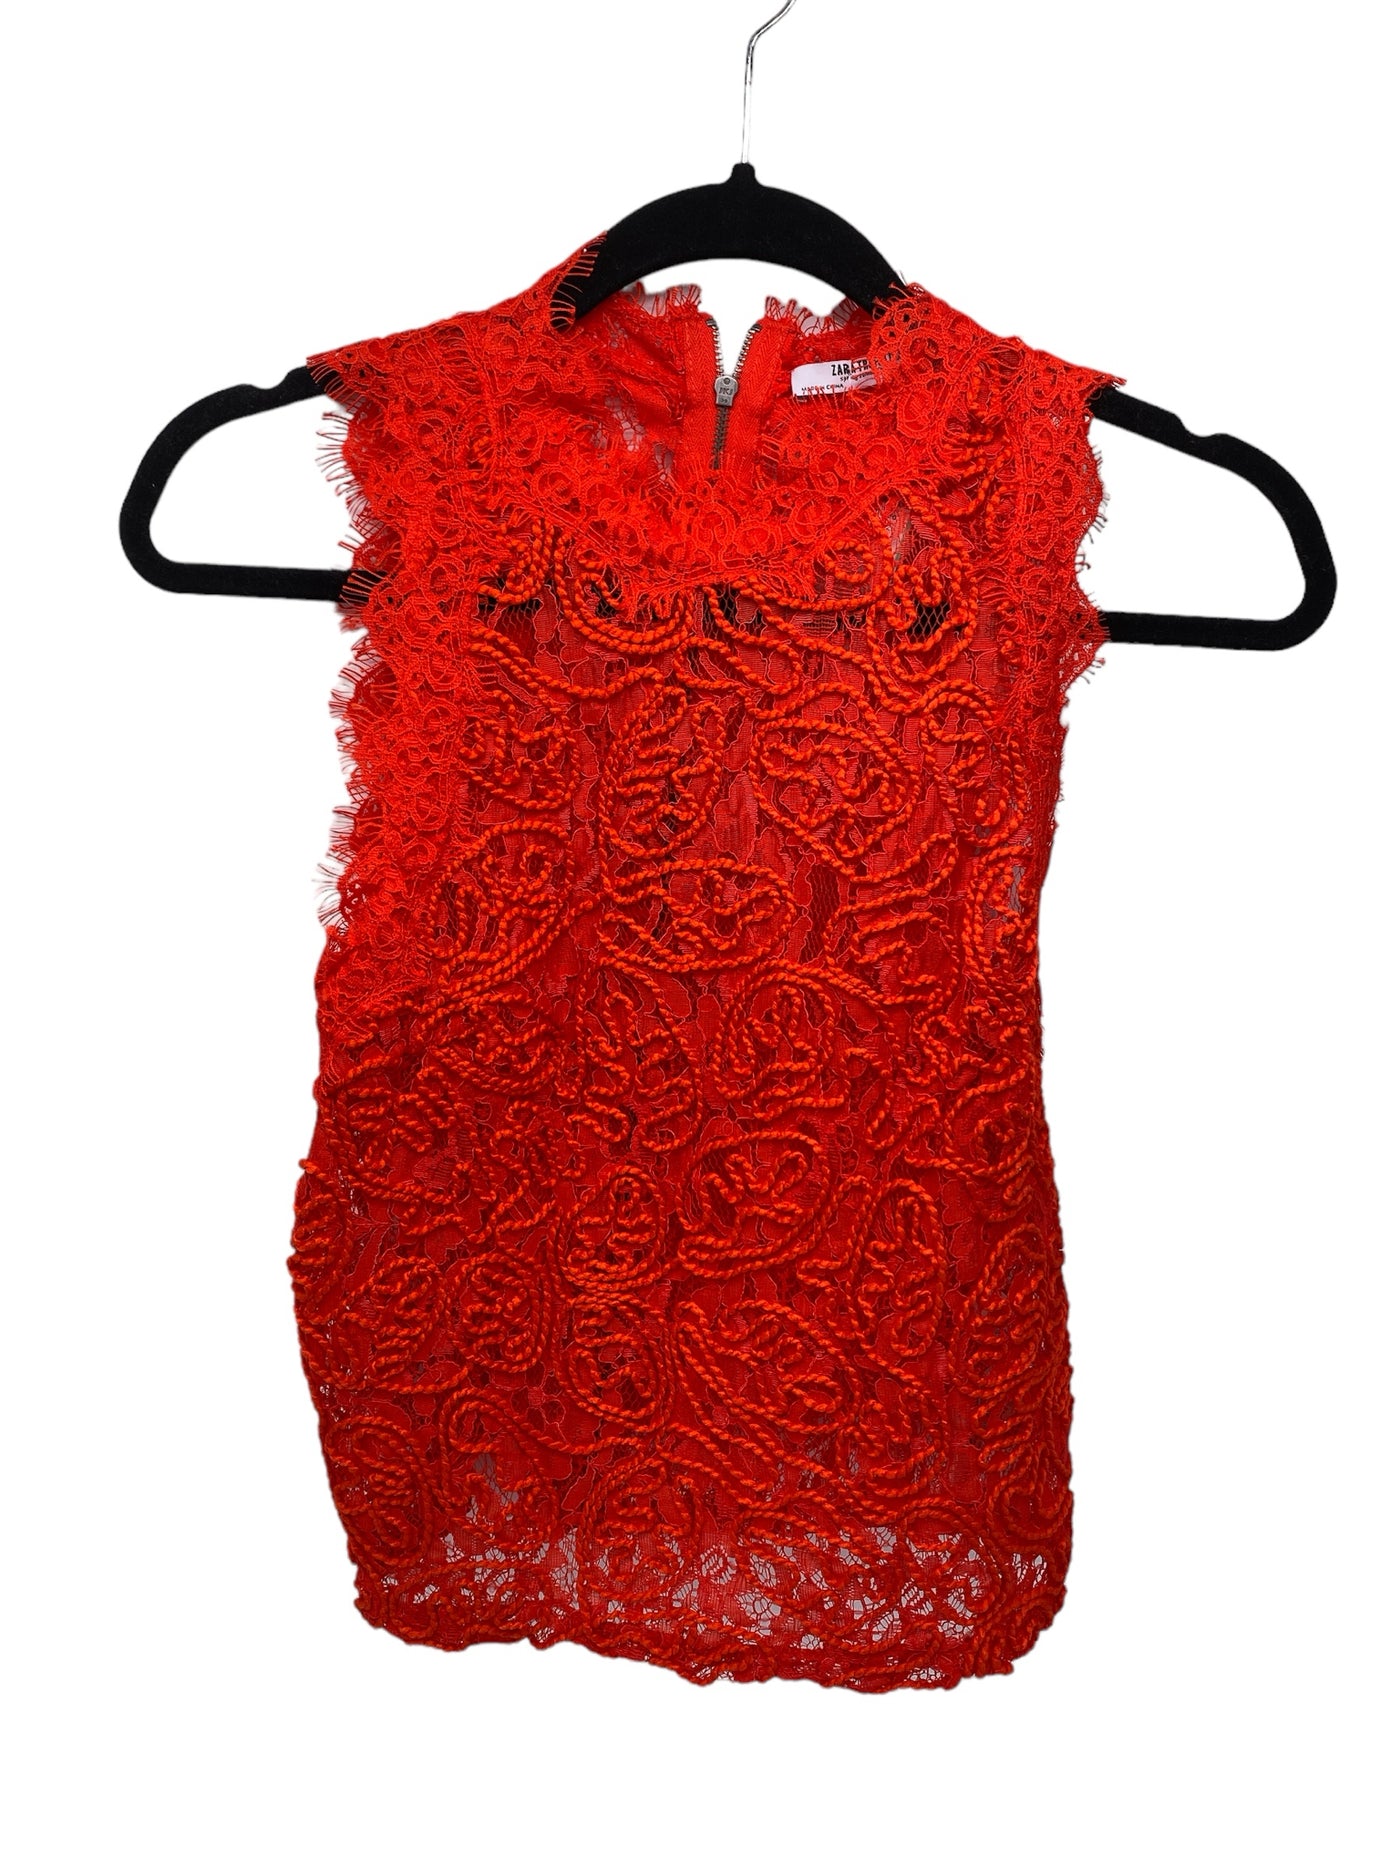 Zara Misses Size Medium Red SL Blouse